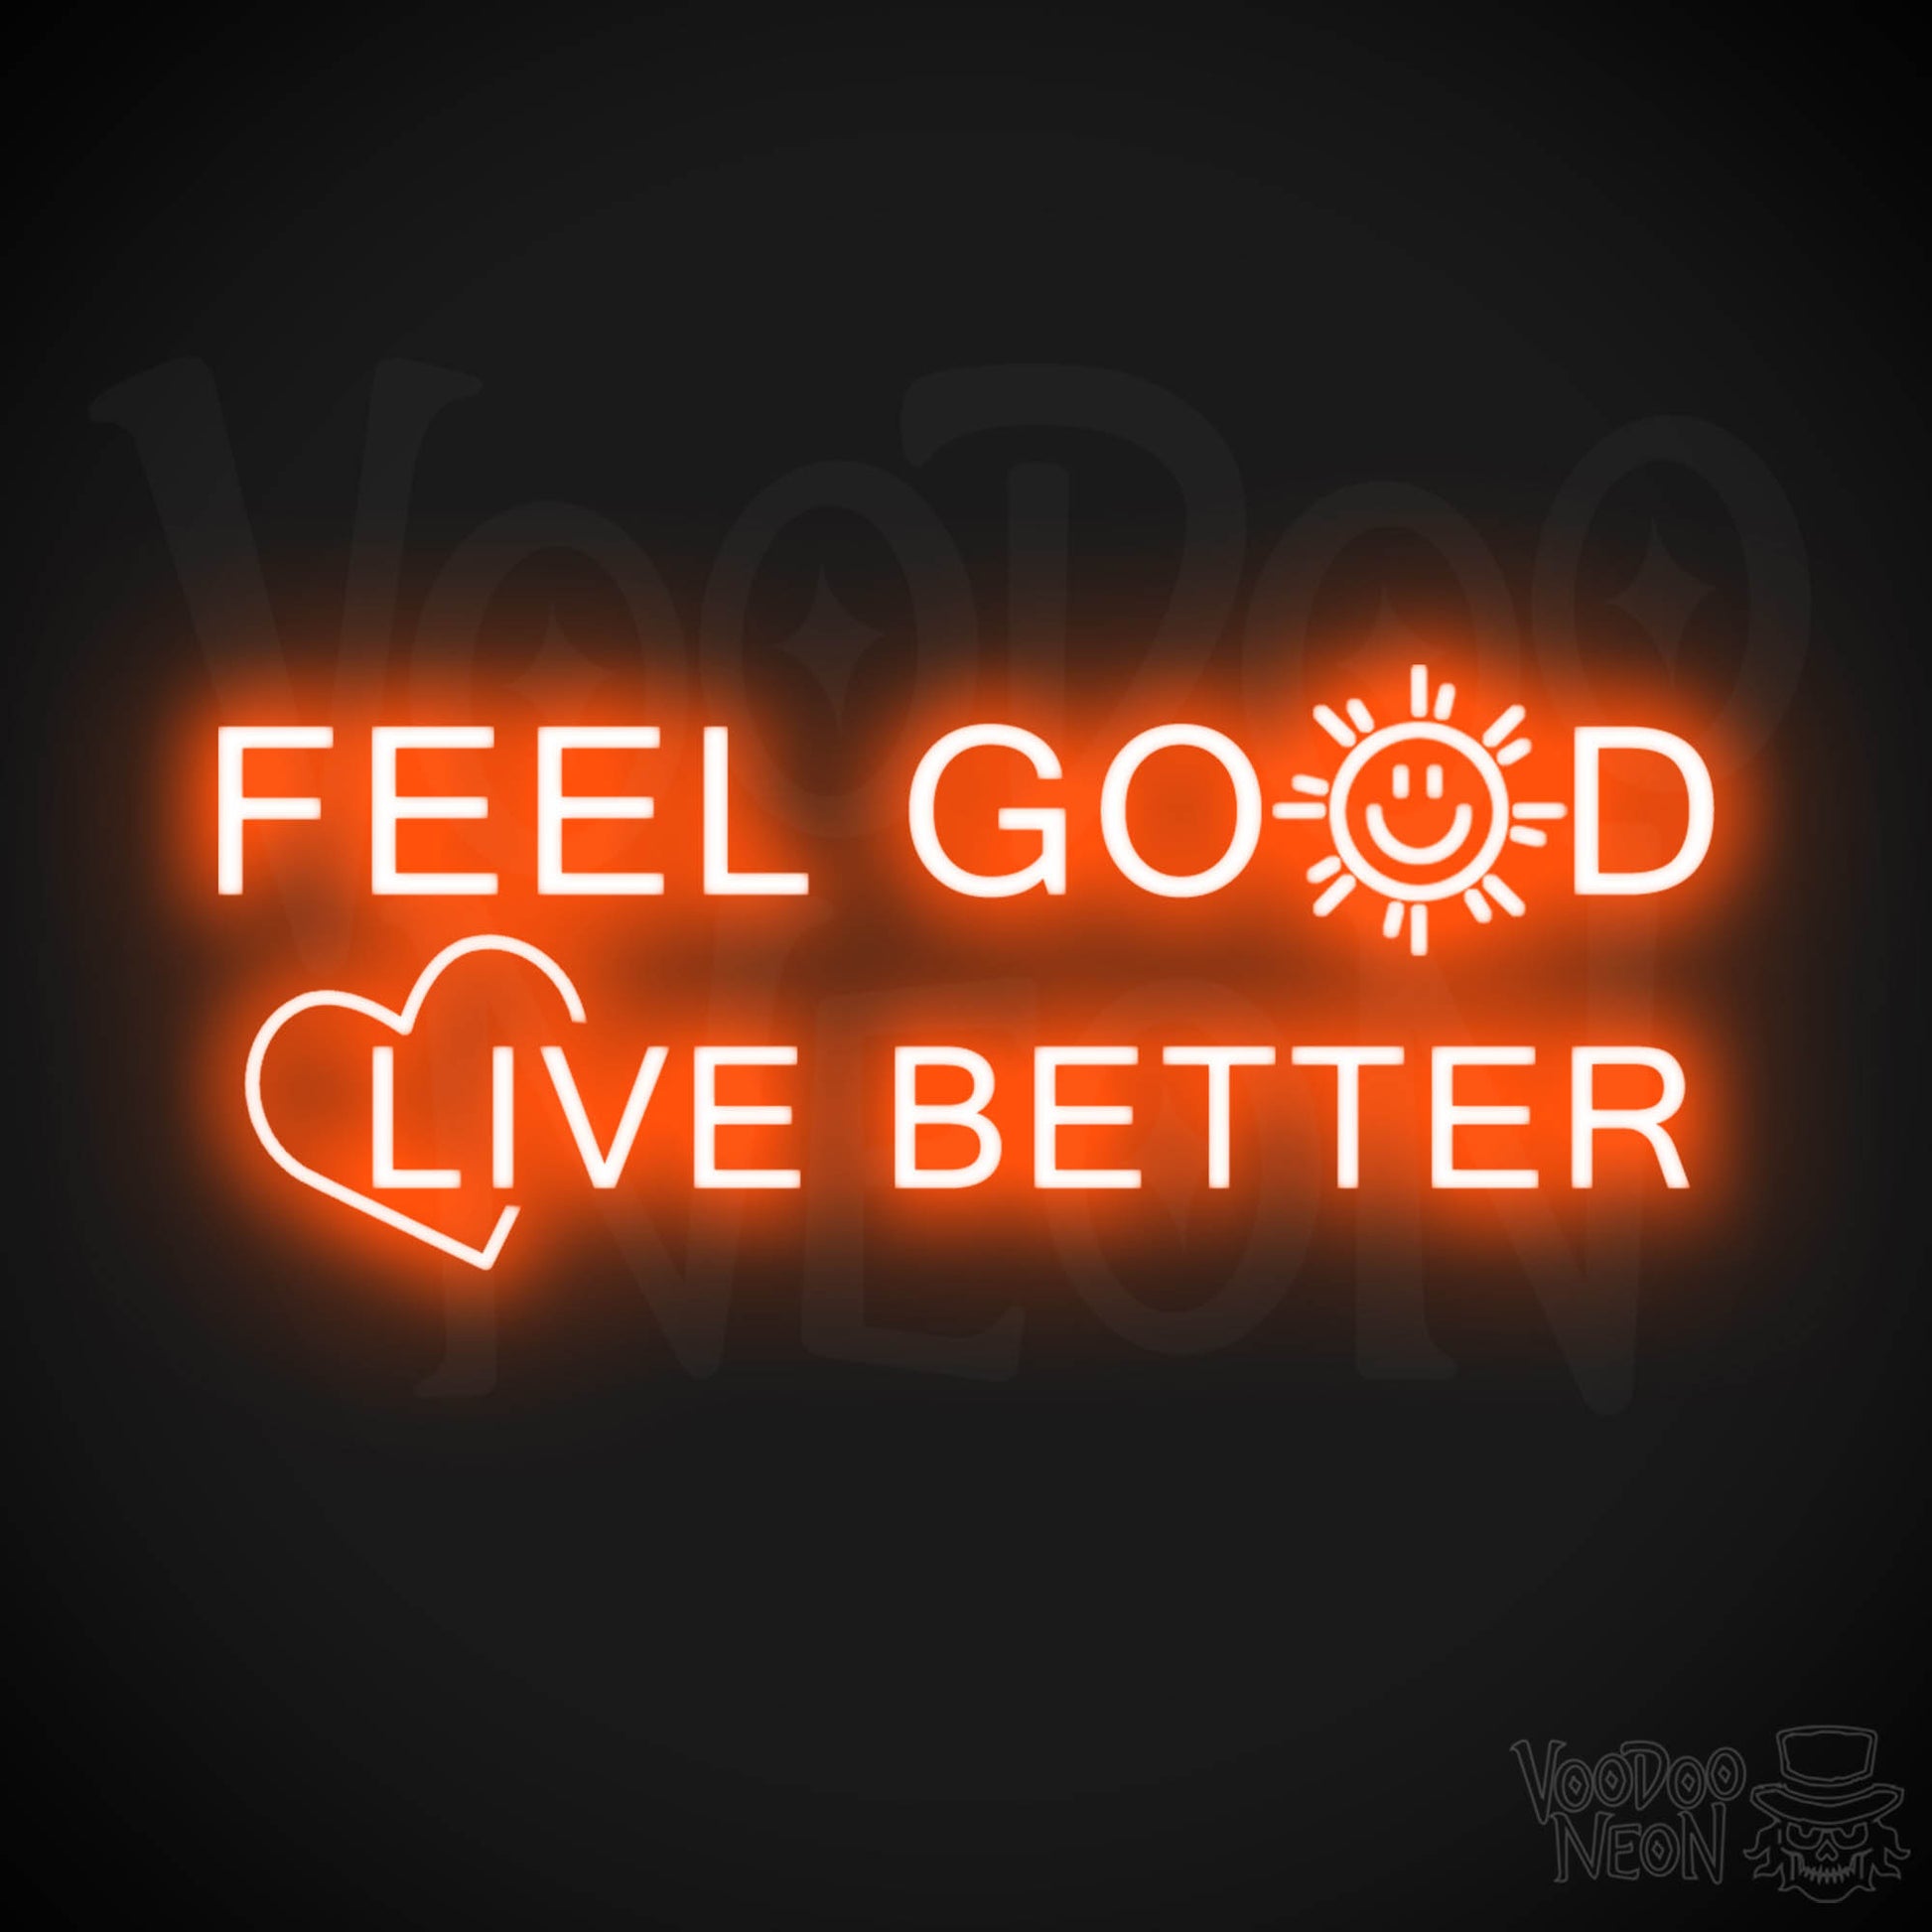 Feel Good Live Better Neon Sign - Feel Good Live Better Sign - Color Orange